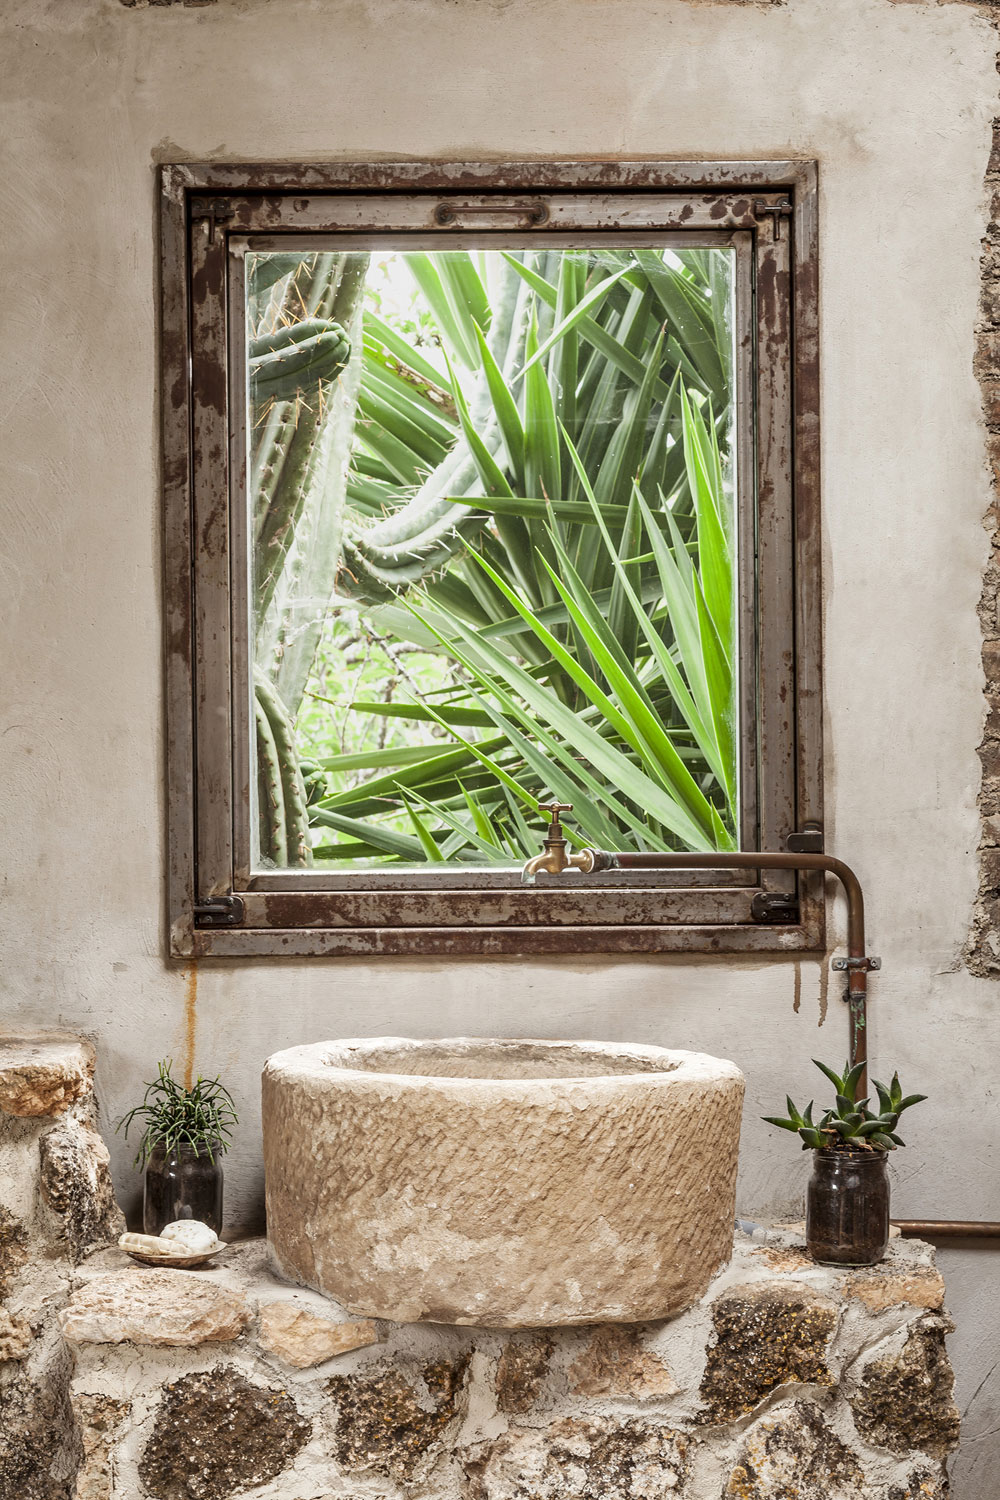 Dressing Room & Bath Room for a Garden / Clara Nubiola (14)